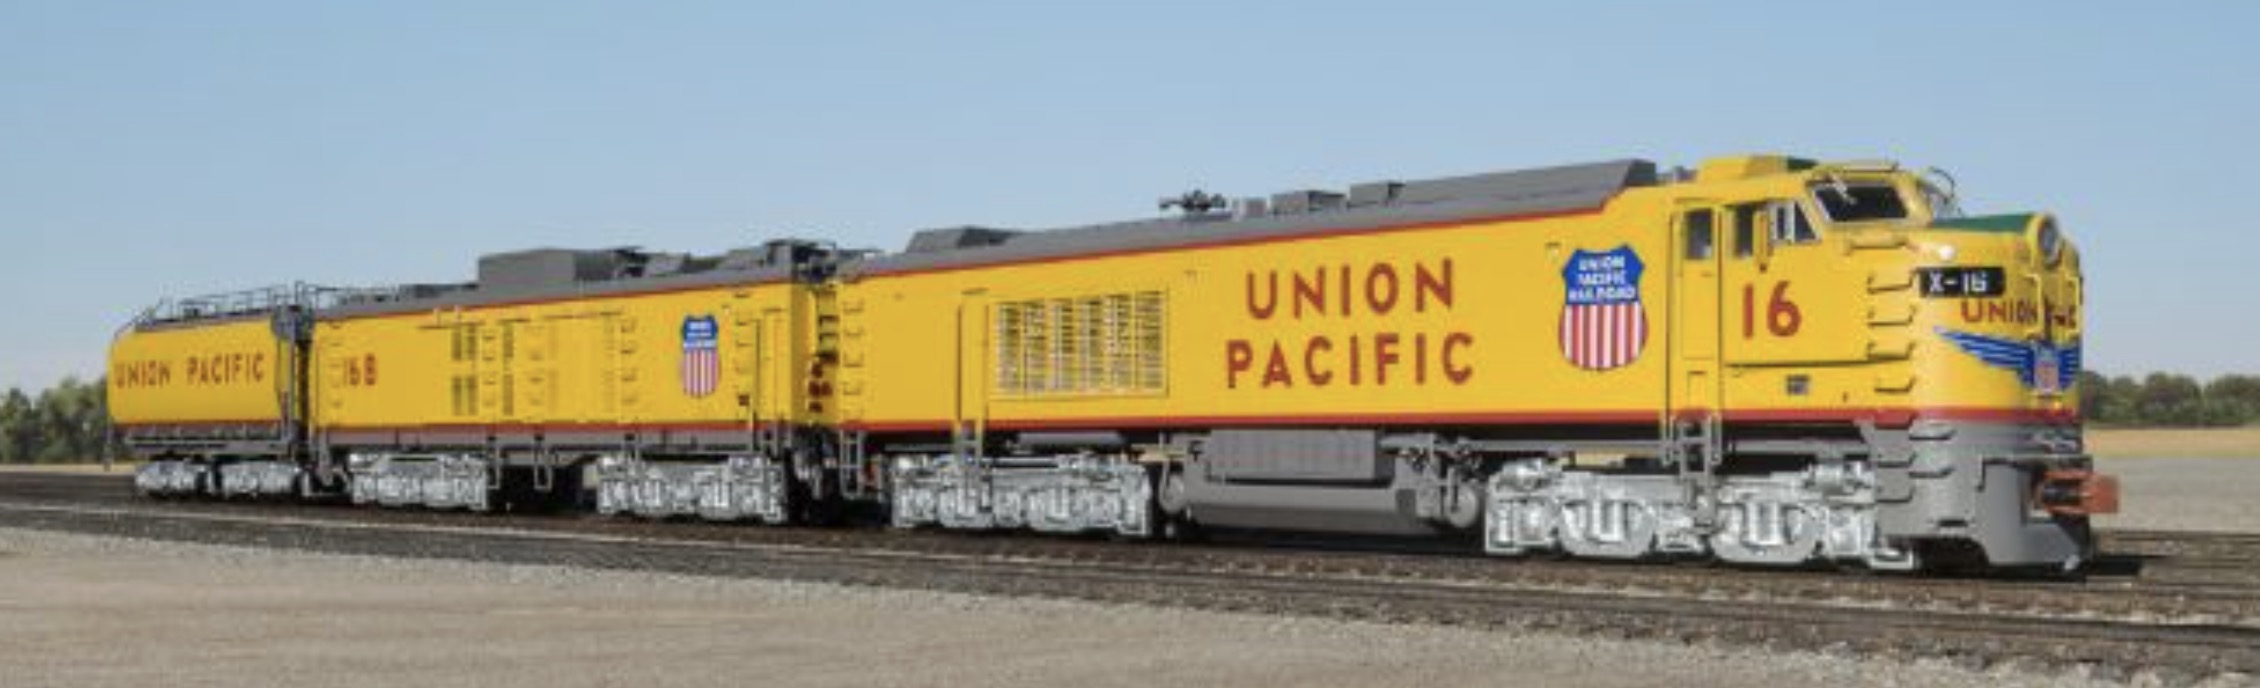 N Scale - ScaleTrains - SXT33533 - Locomotive, Gas Turbine-Electric - Union Pacific - 16